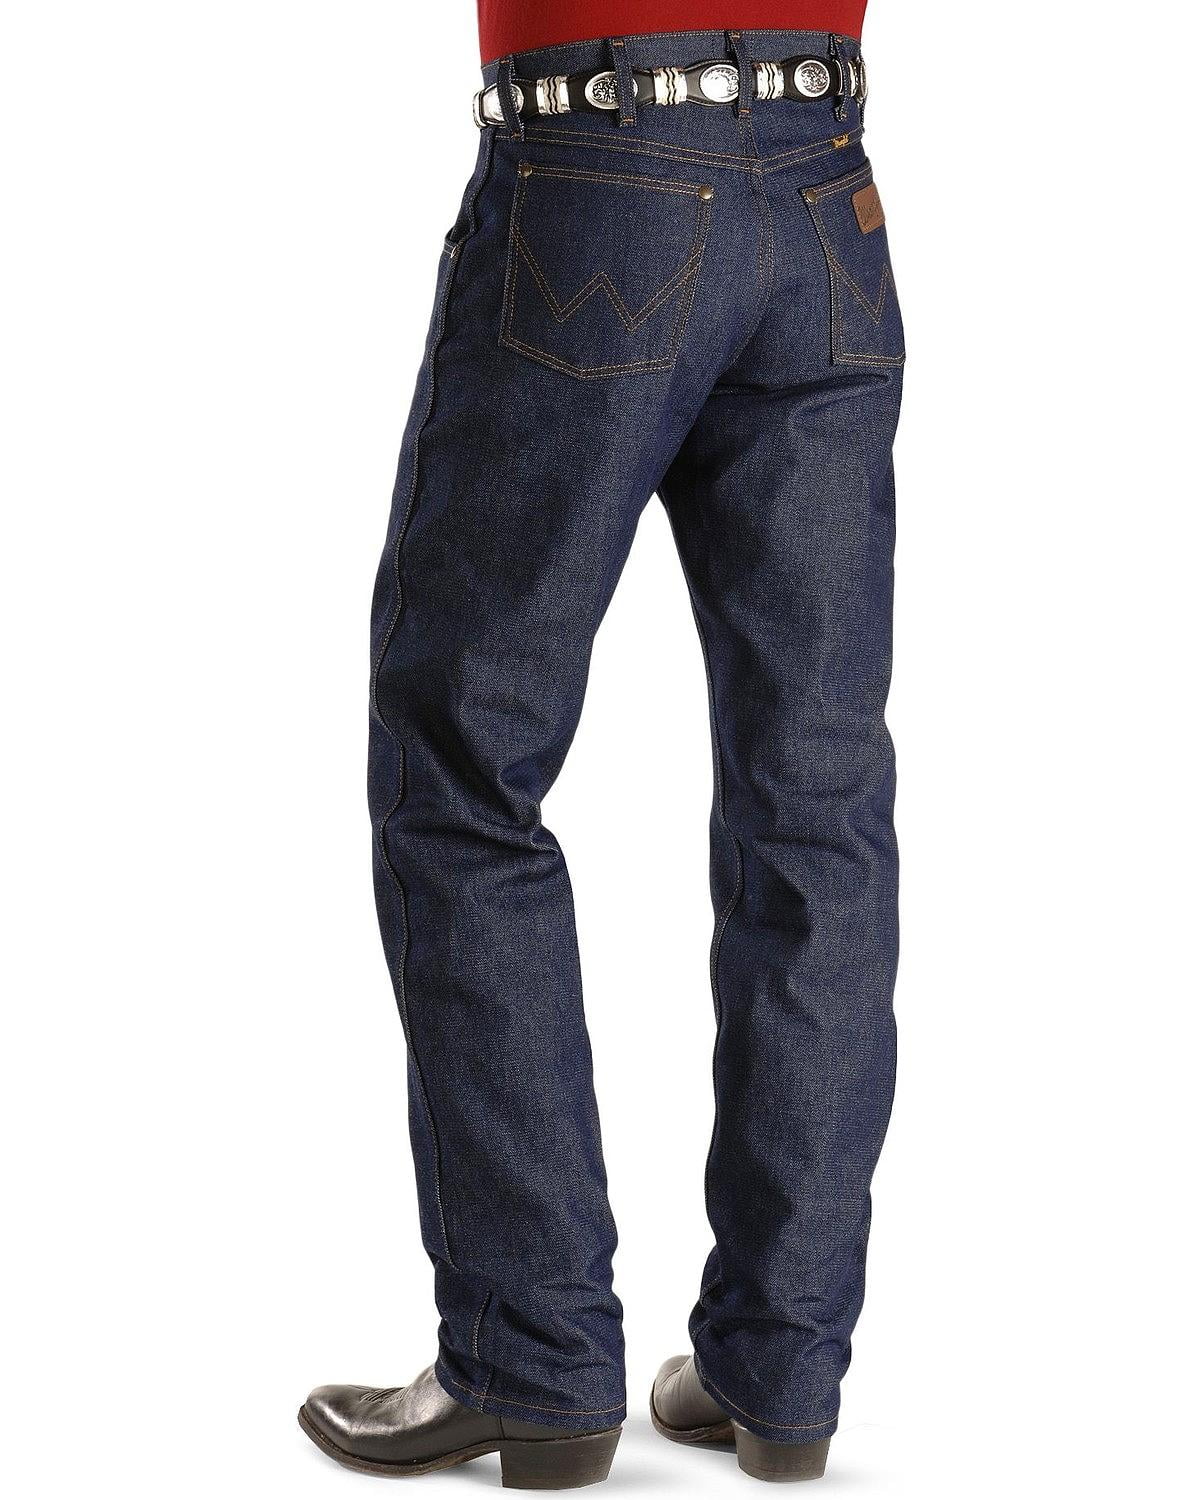 wrangler men's jeans 47mwz original fit 